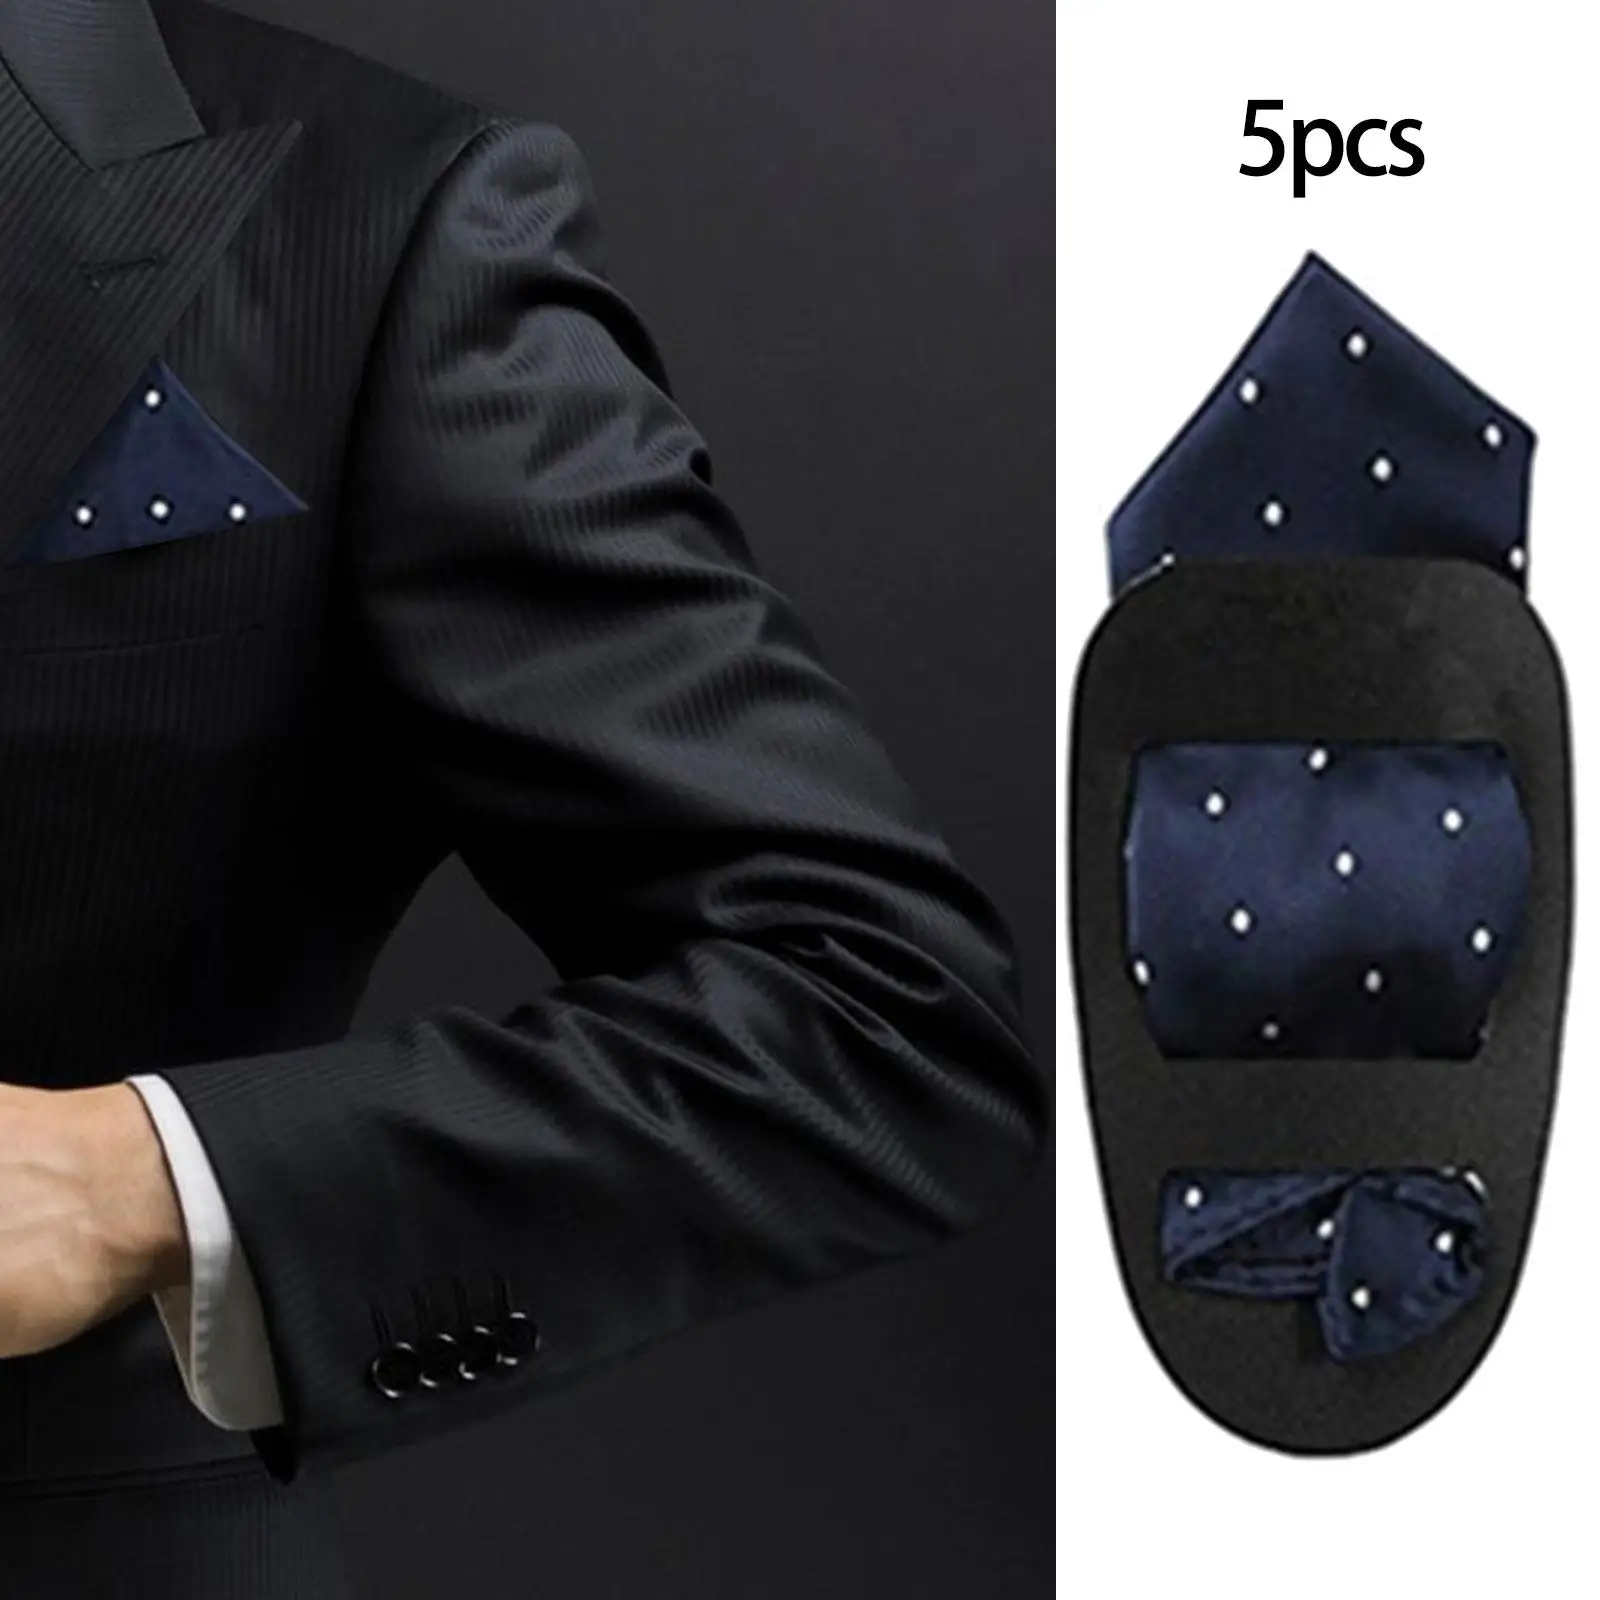 5 Pieces Pocket Square Holder Square Scarf Holder for Men’S suits Jackets